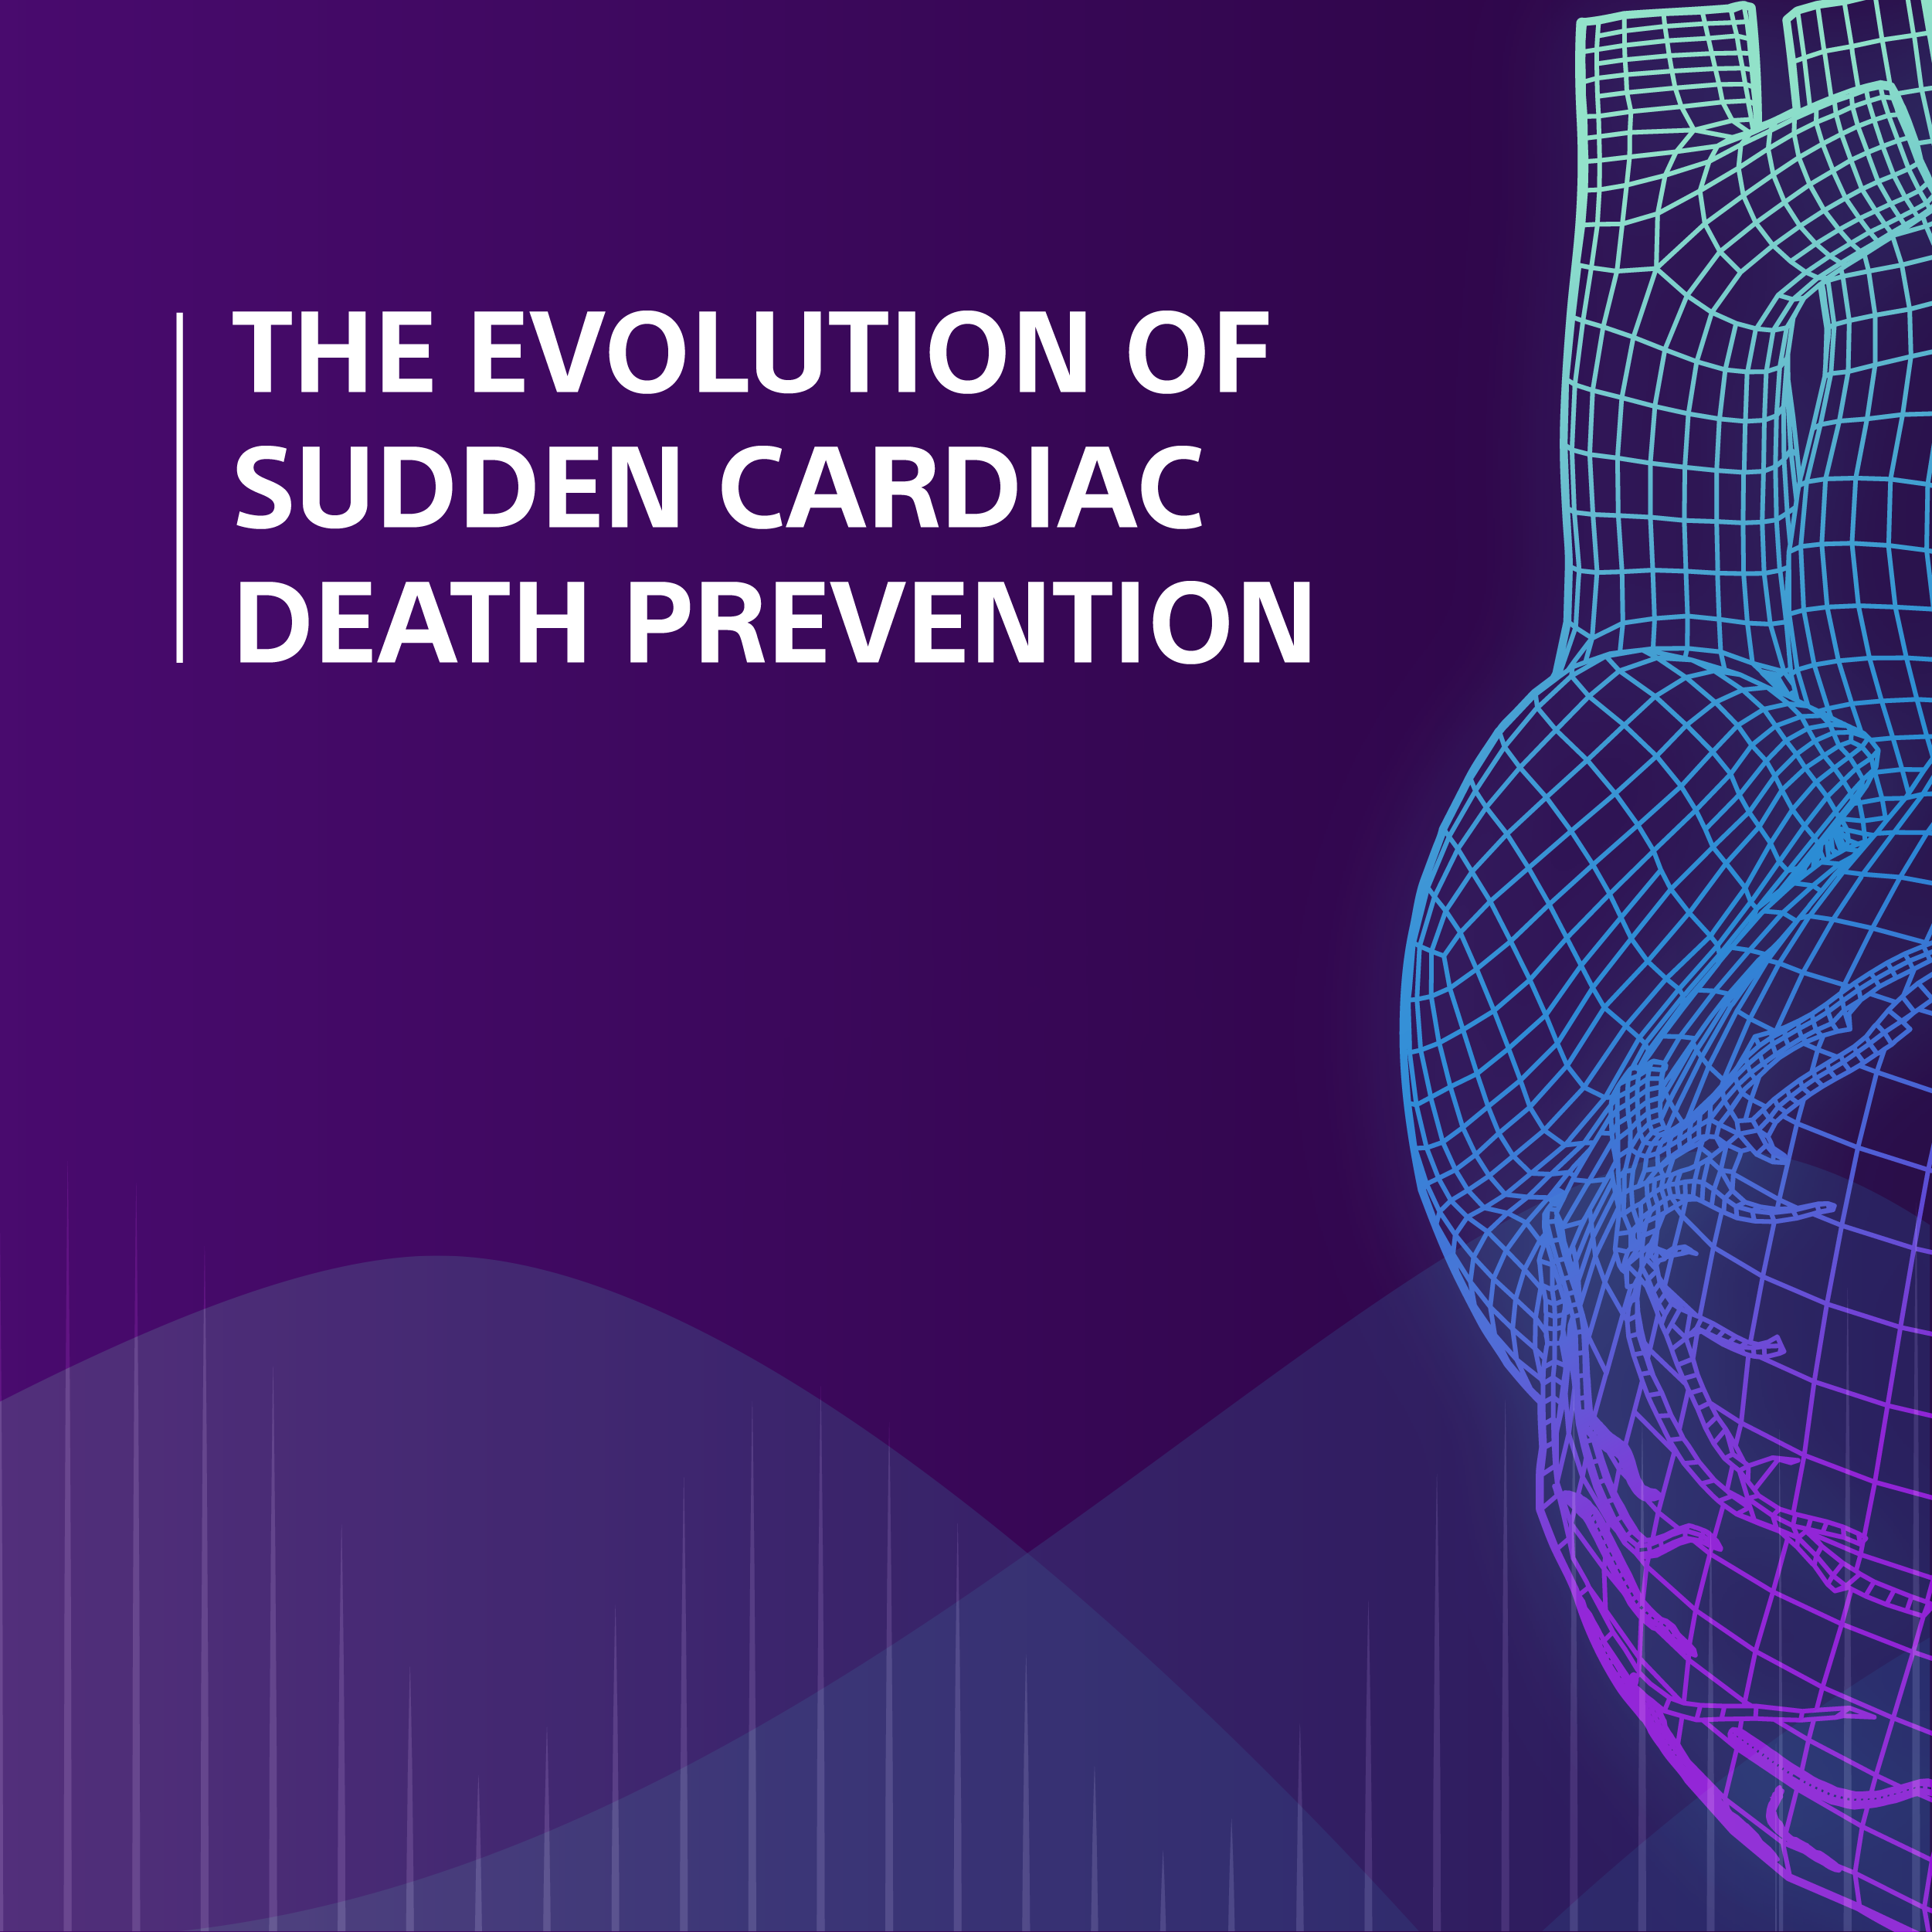 The evolution of sudden cardiac death prevention